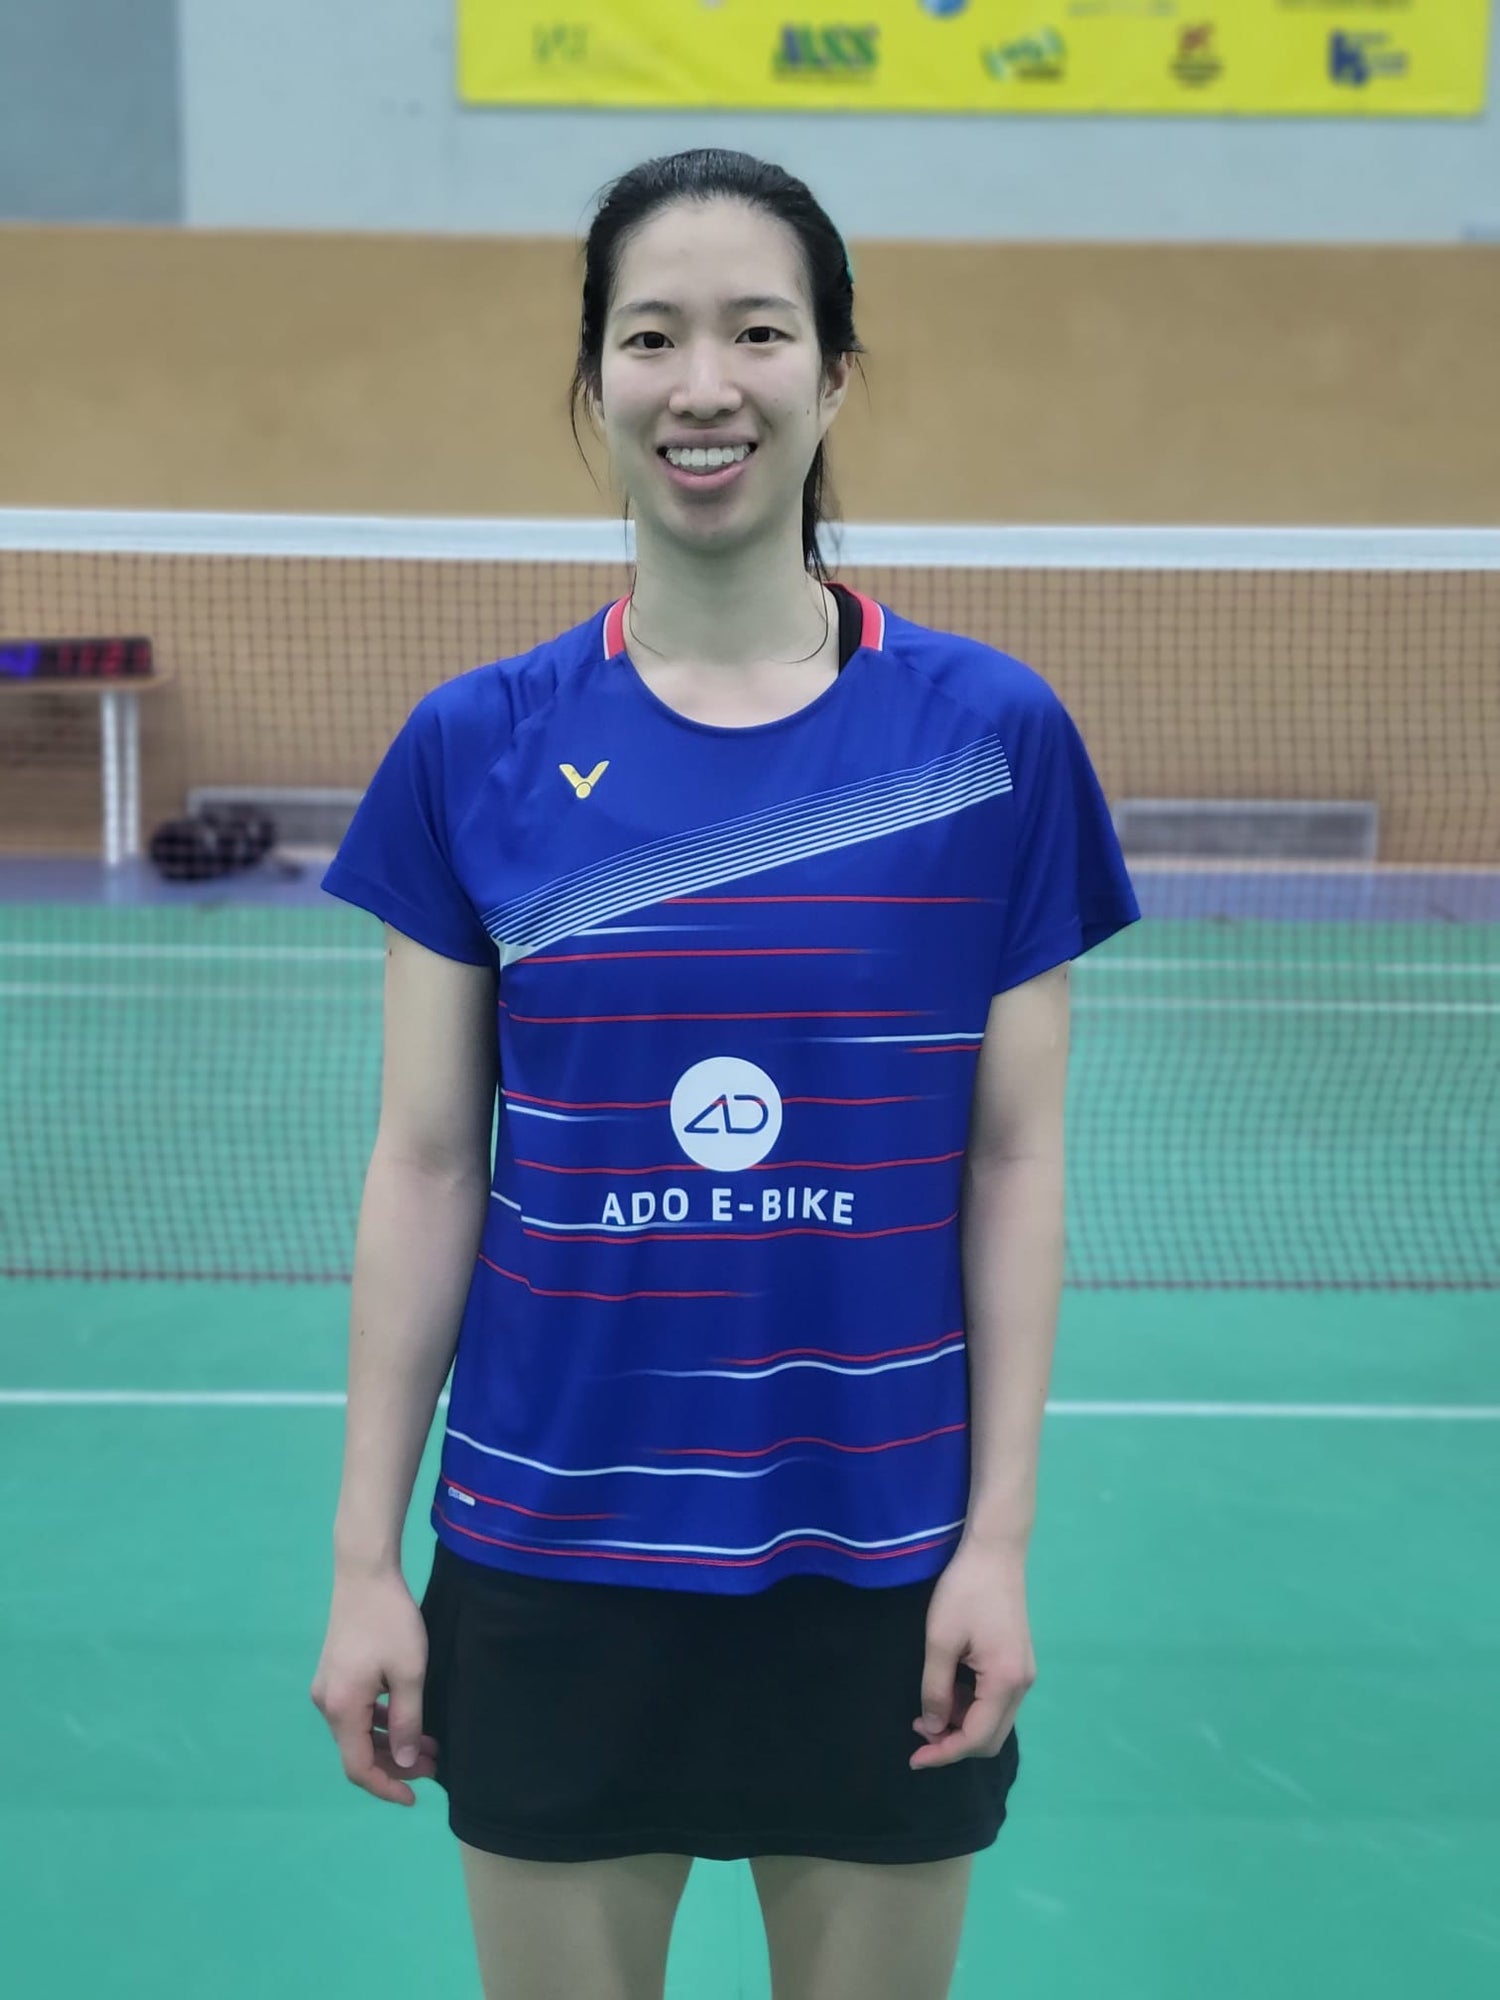 Yvonne Li lächelt auf dem Badmintonfeld